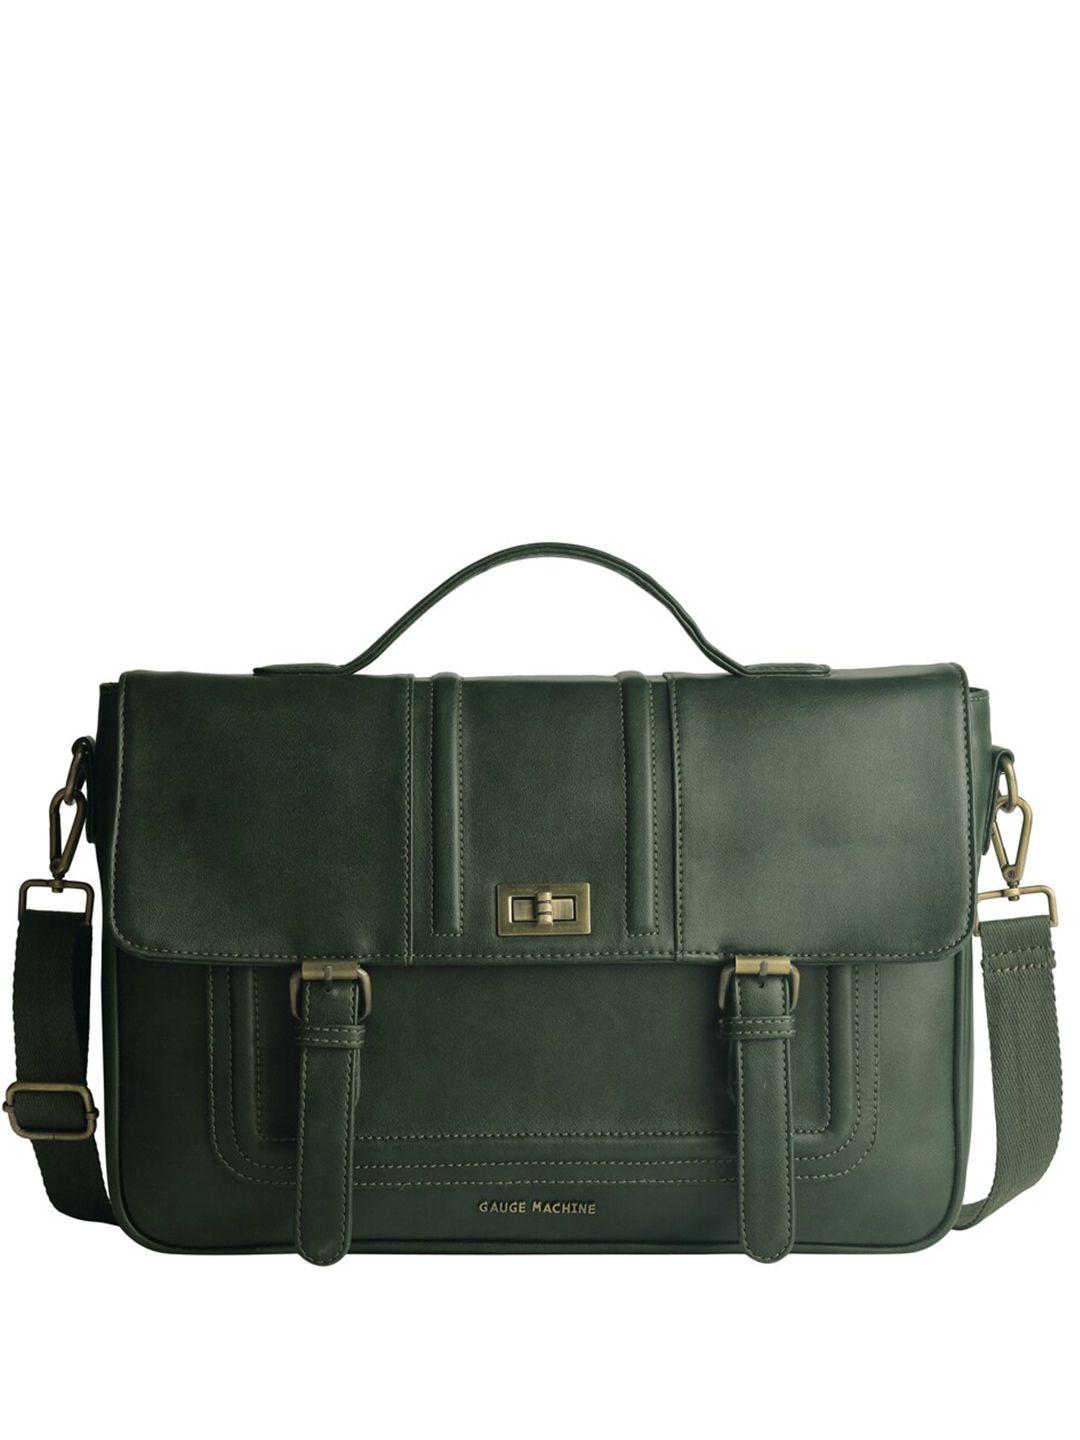 gauge machine unisex green & bronze-toned leather laptop bag